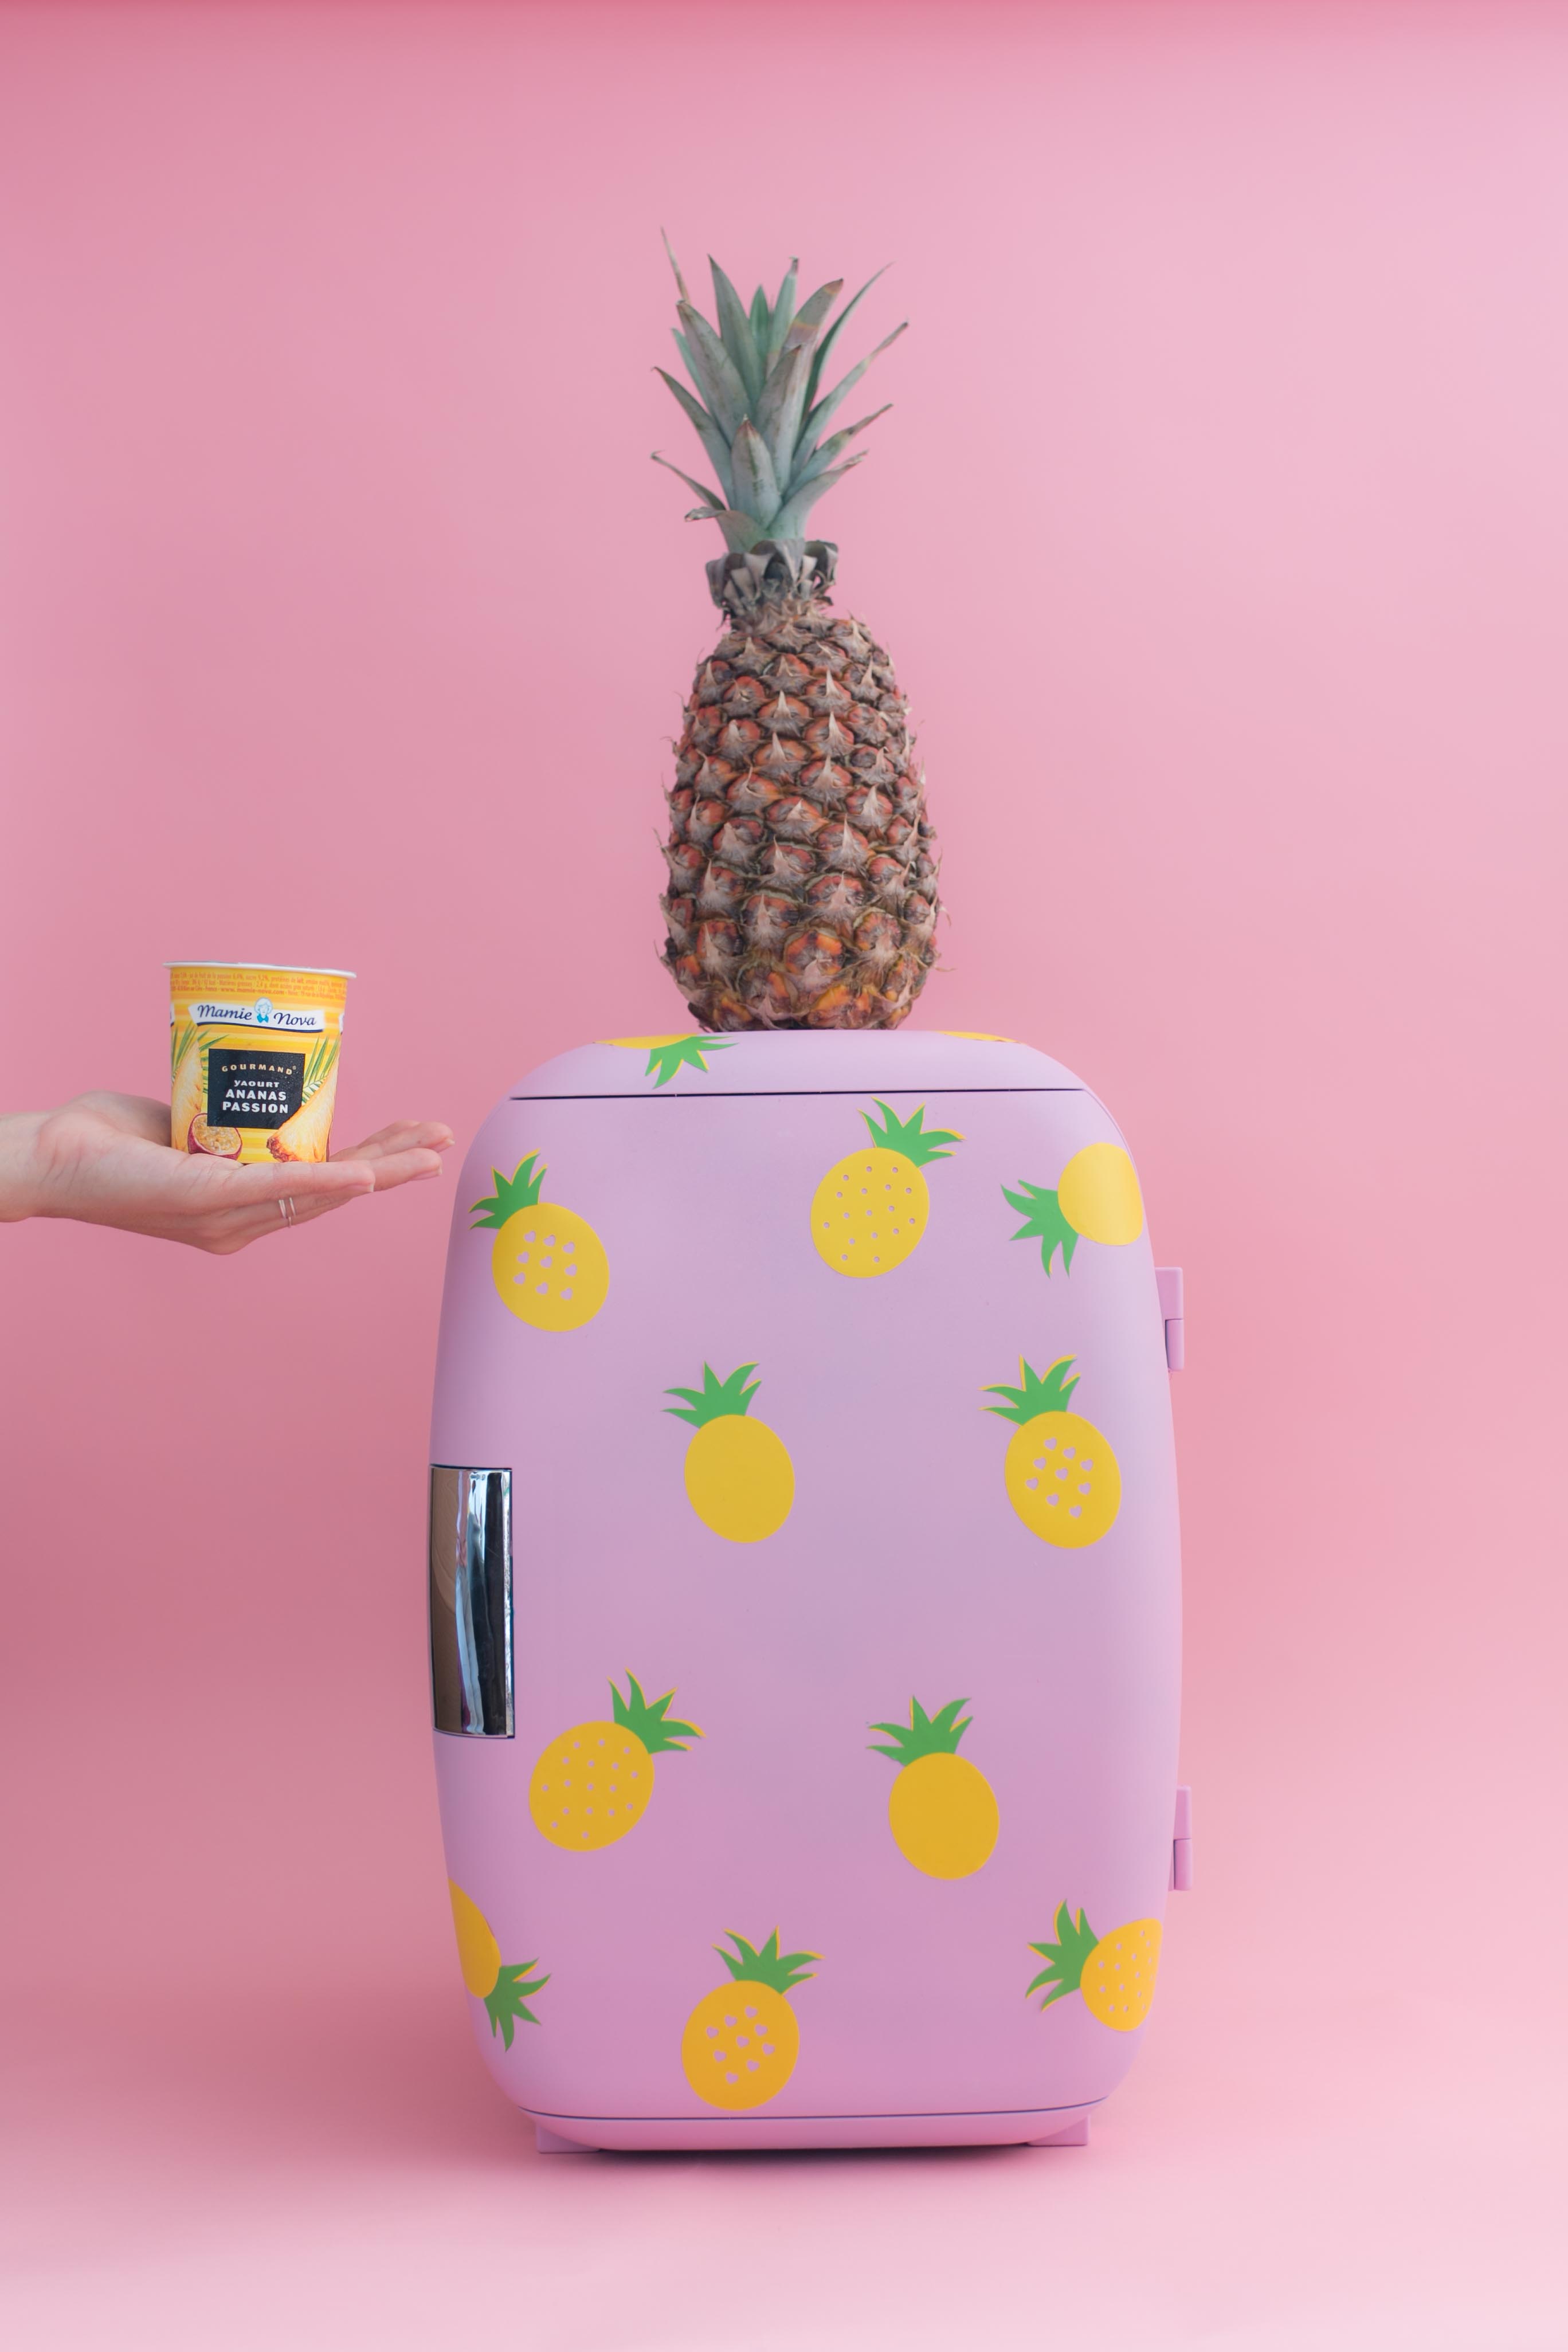 diy-frigo-anana-pineapple-fridge-i-sp4nkblog-x-mamie-nova-2